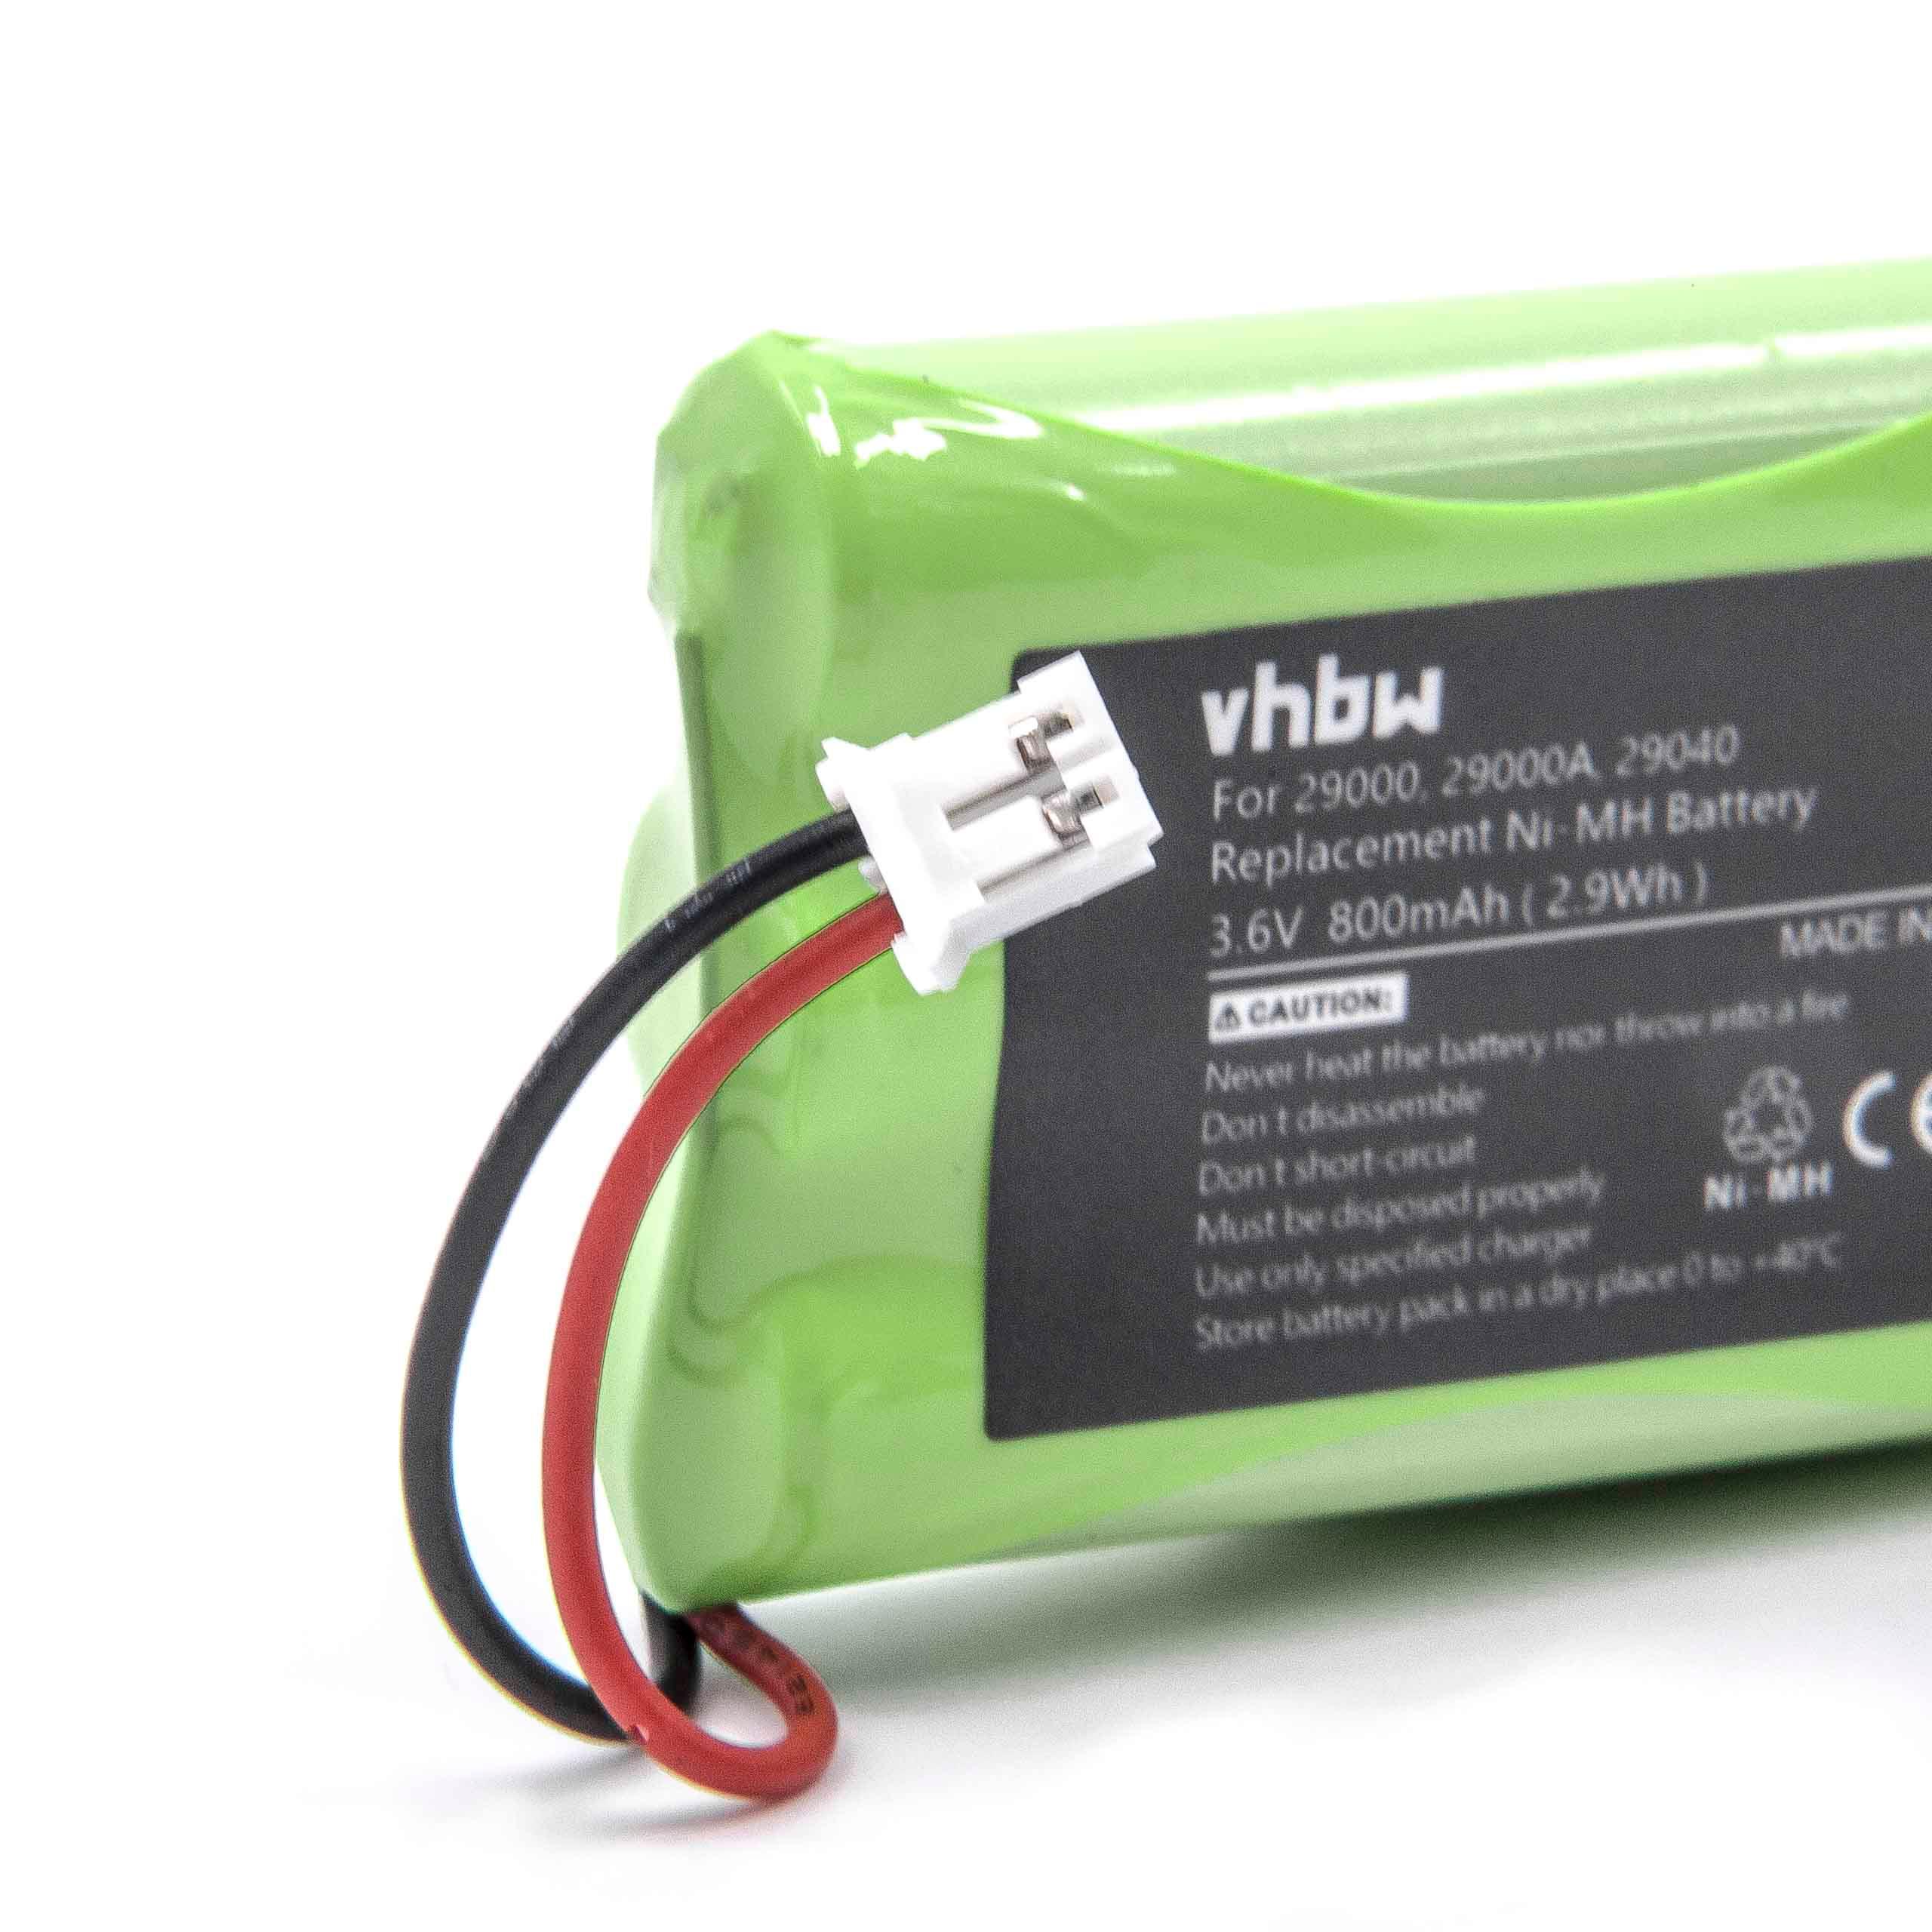 Baby Monitor Battery Replacement for Motorola CB94-01A, TFL3X44AAA900 - 800mAh 3.6V NiMH